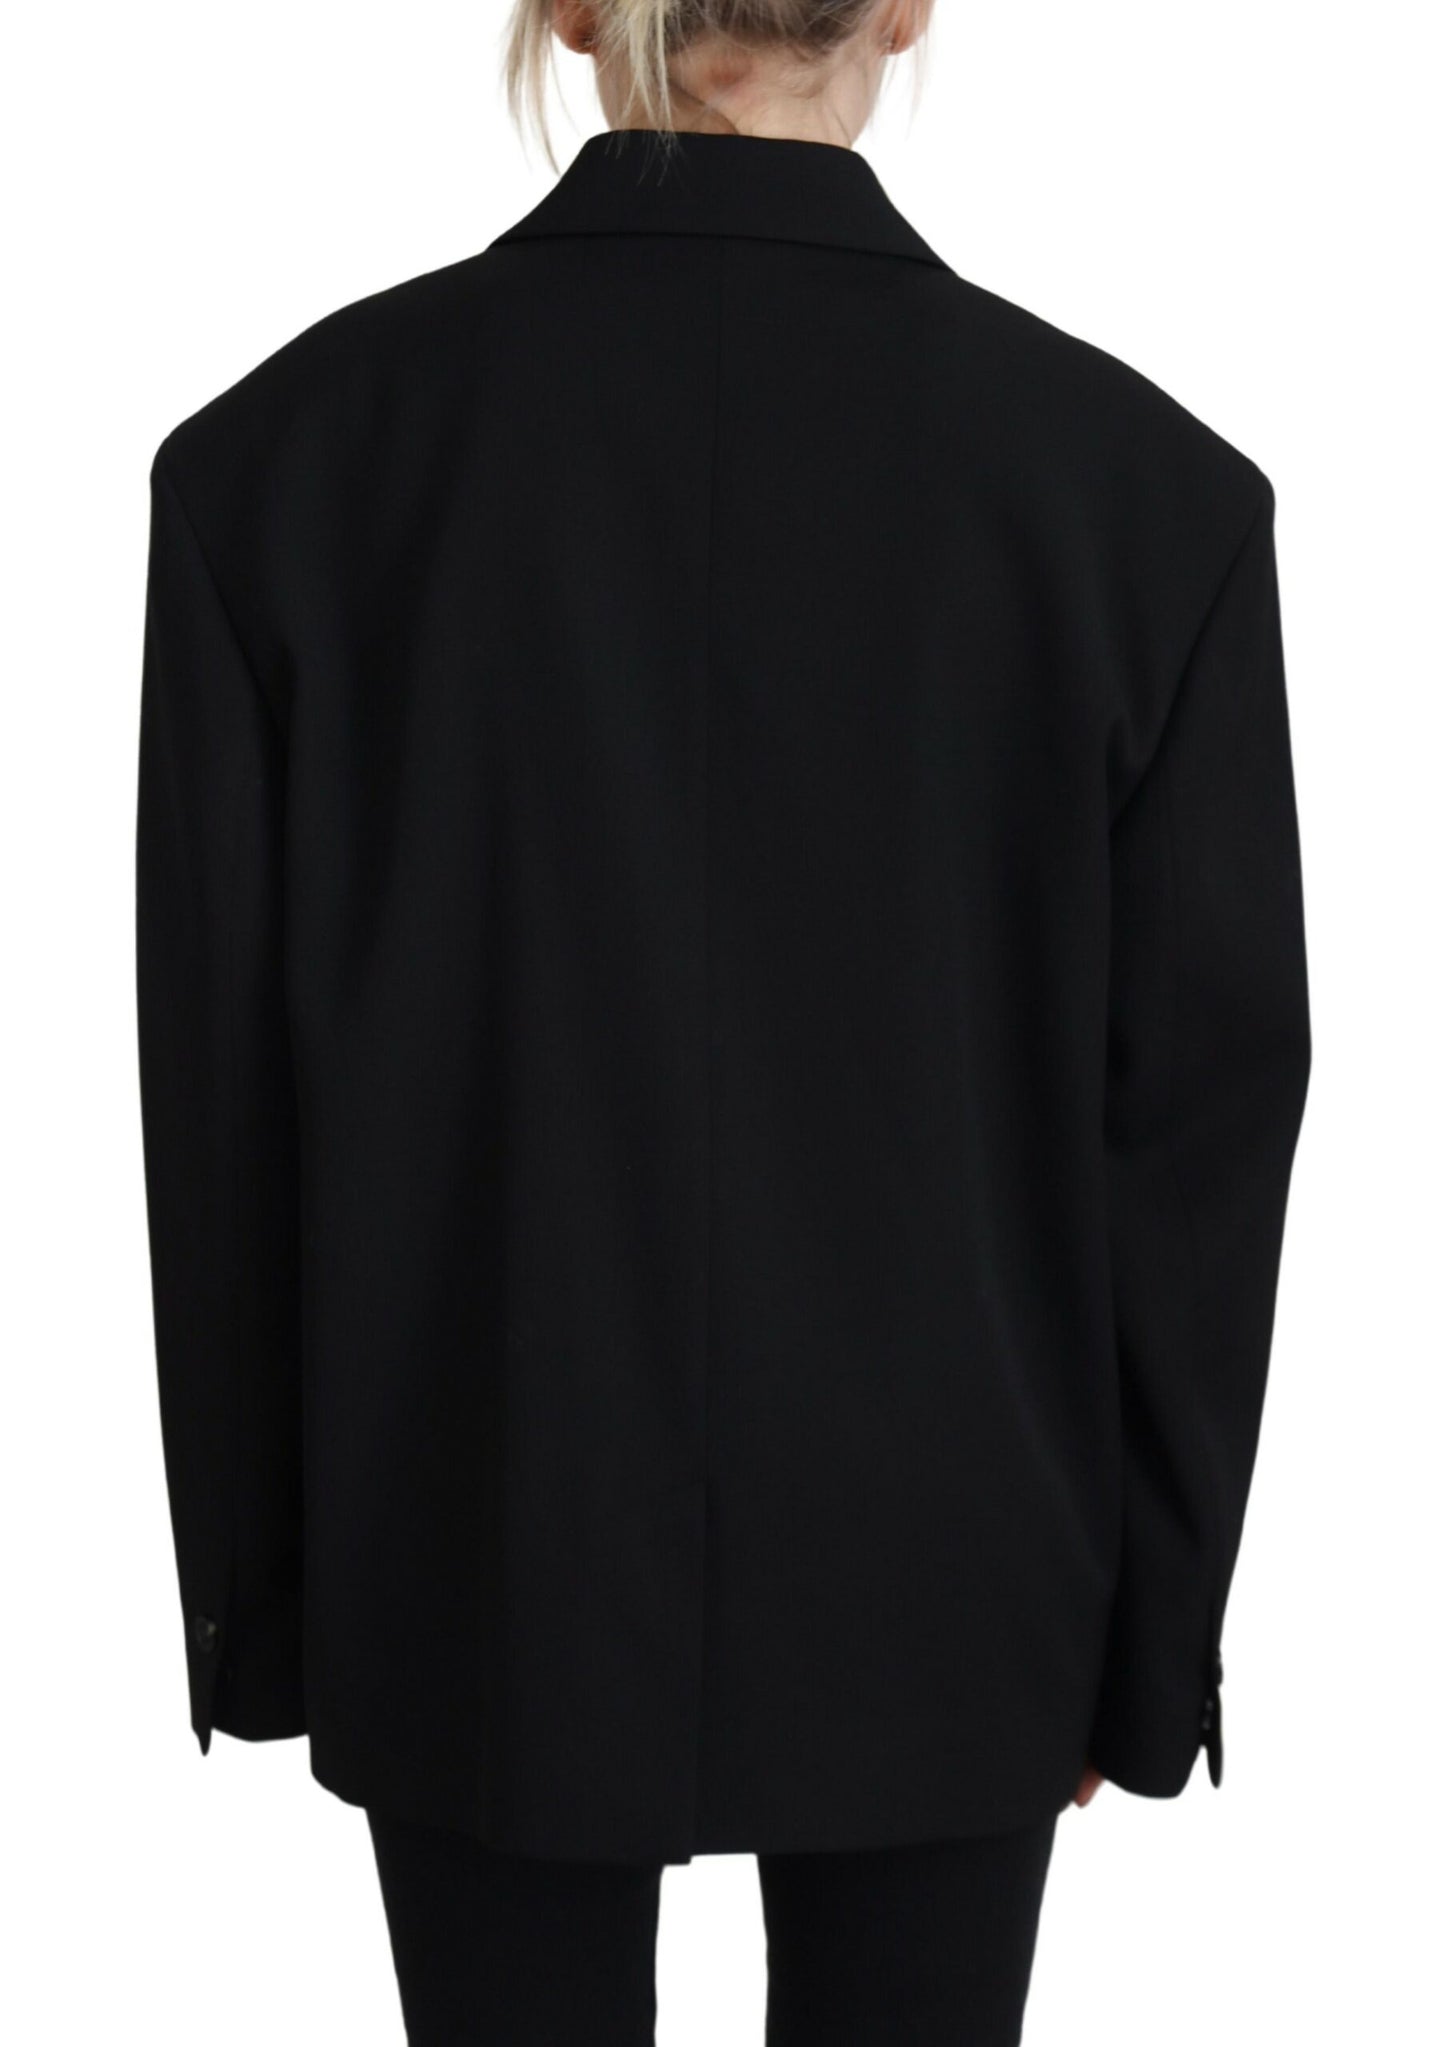 Dsquared² Black Double Breasted Coat Blazer Jacket